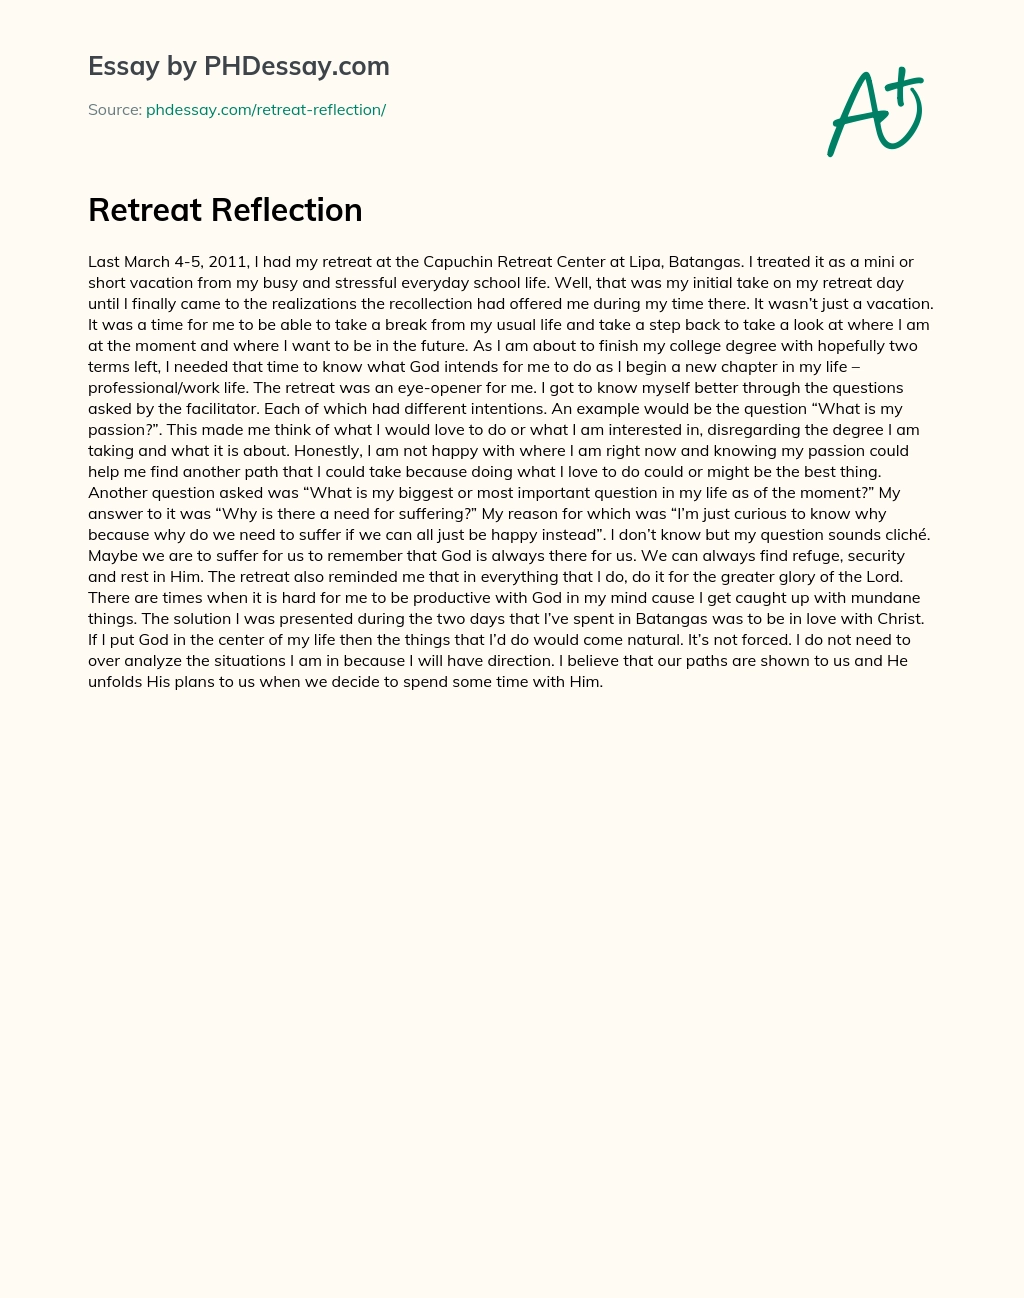 Retreat Reflection essay